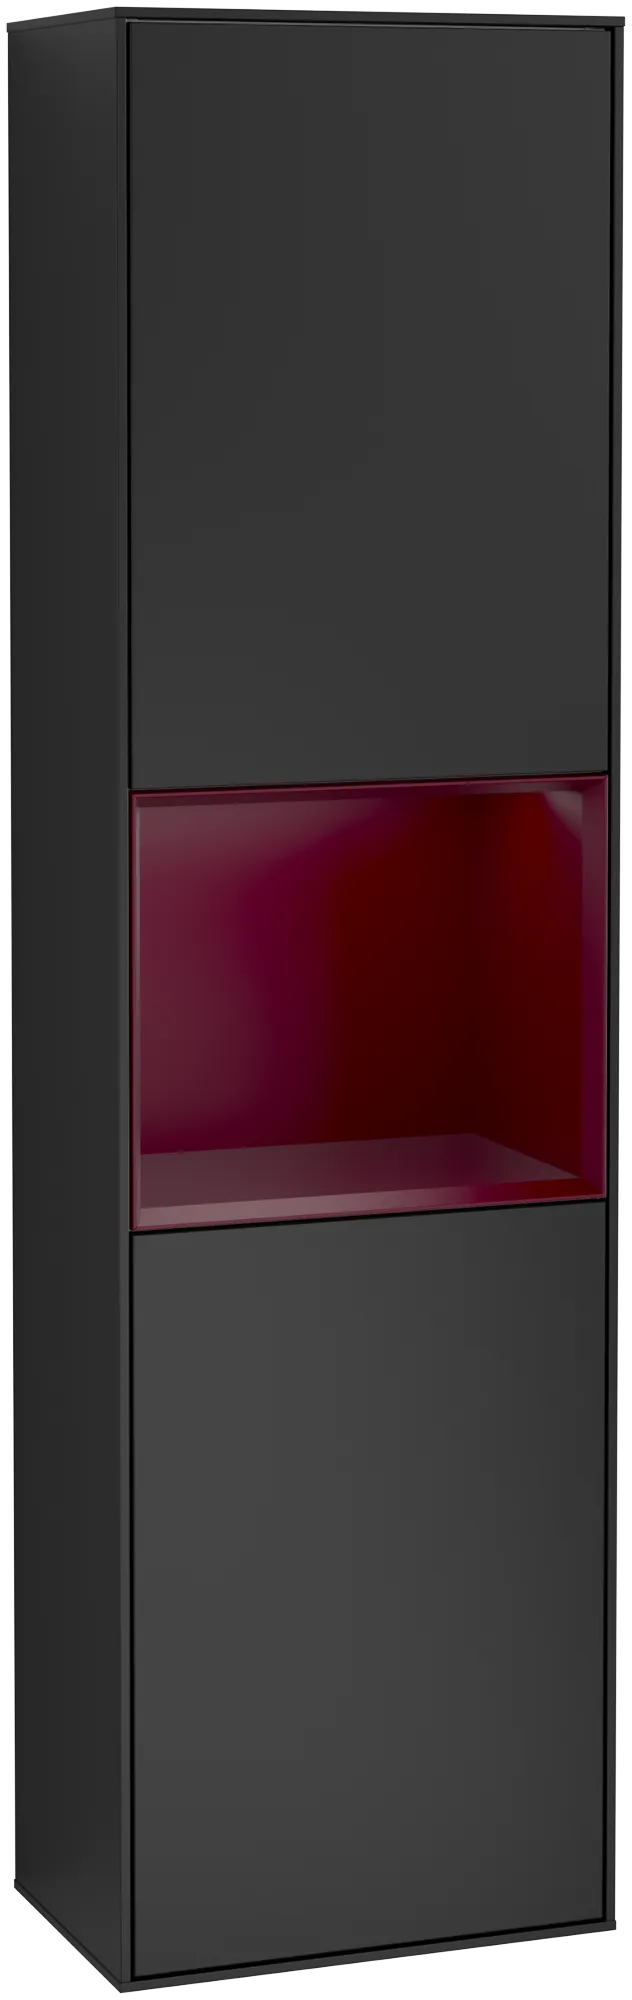 Bild von VILLEROY BOCH Finion Hochschrank, mit Beleuchtung, 2 Türen, 418 x 1516 x 270 mm, Black Matt Lacquer / Peony Matt Lacquer #G470HBPD